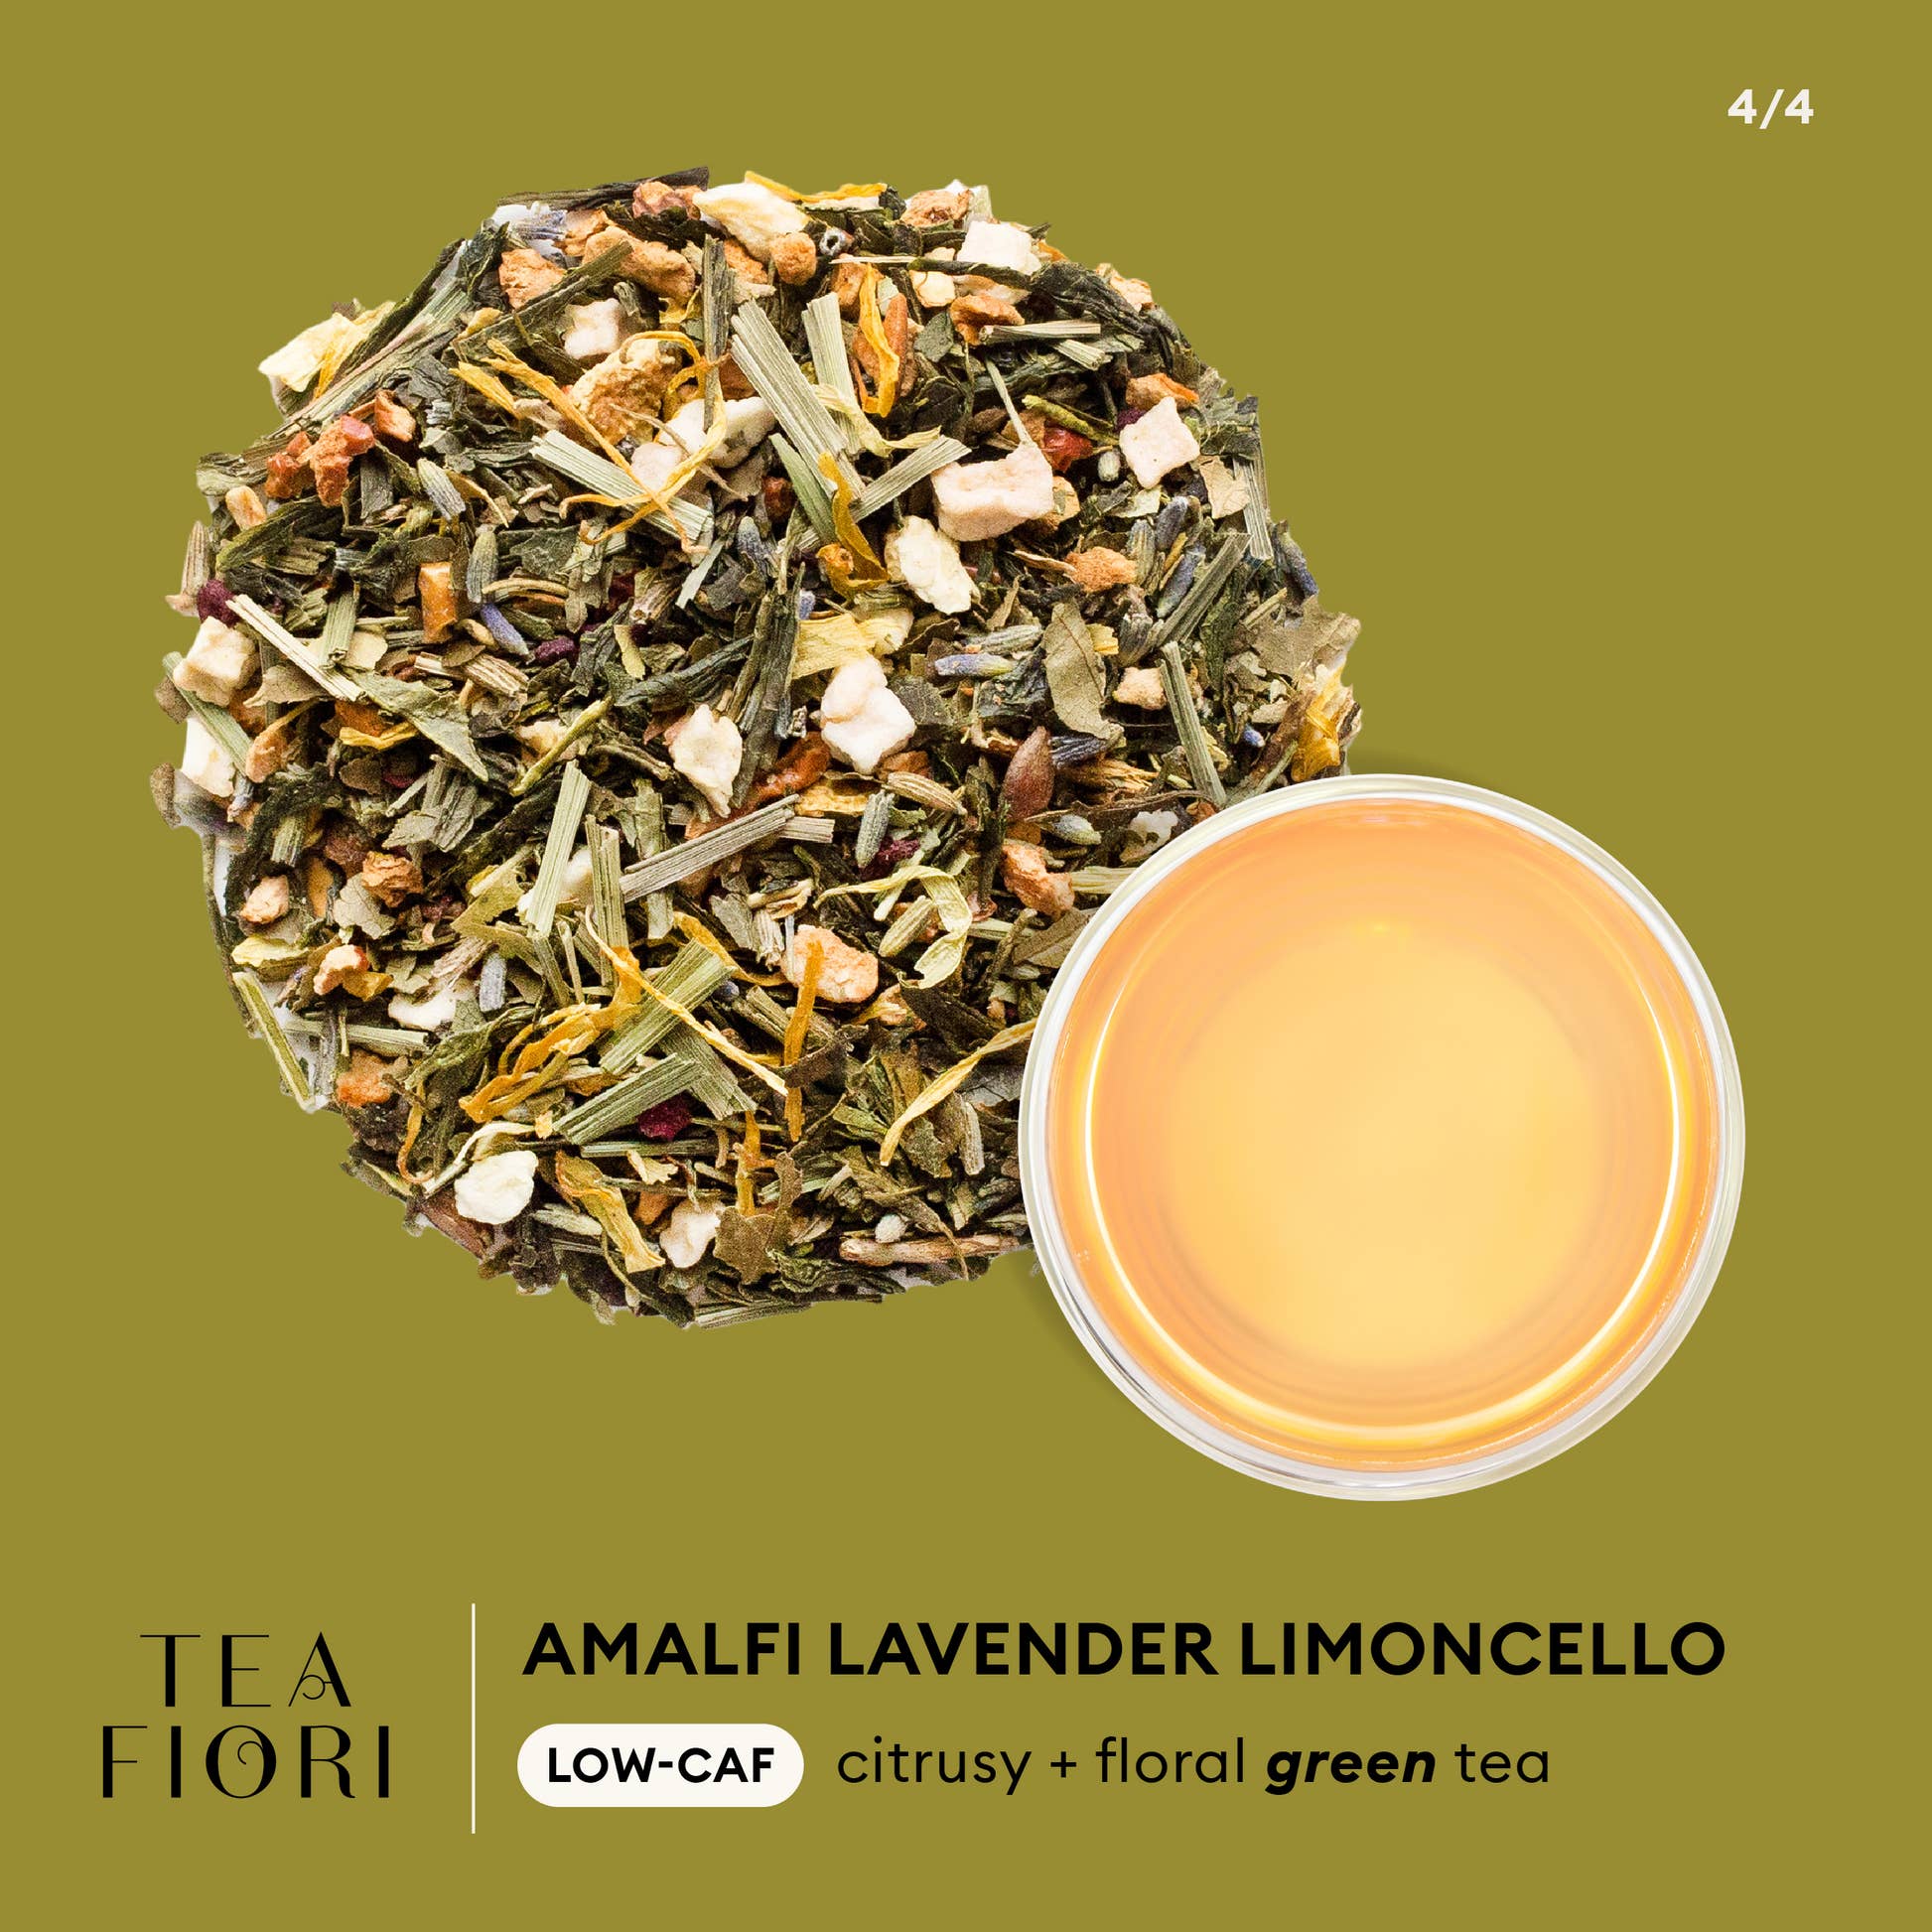 Tea Fiori - Amalfi Lavender Limoncello low-caf, citrusy + floral infographic